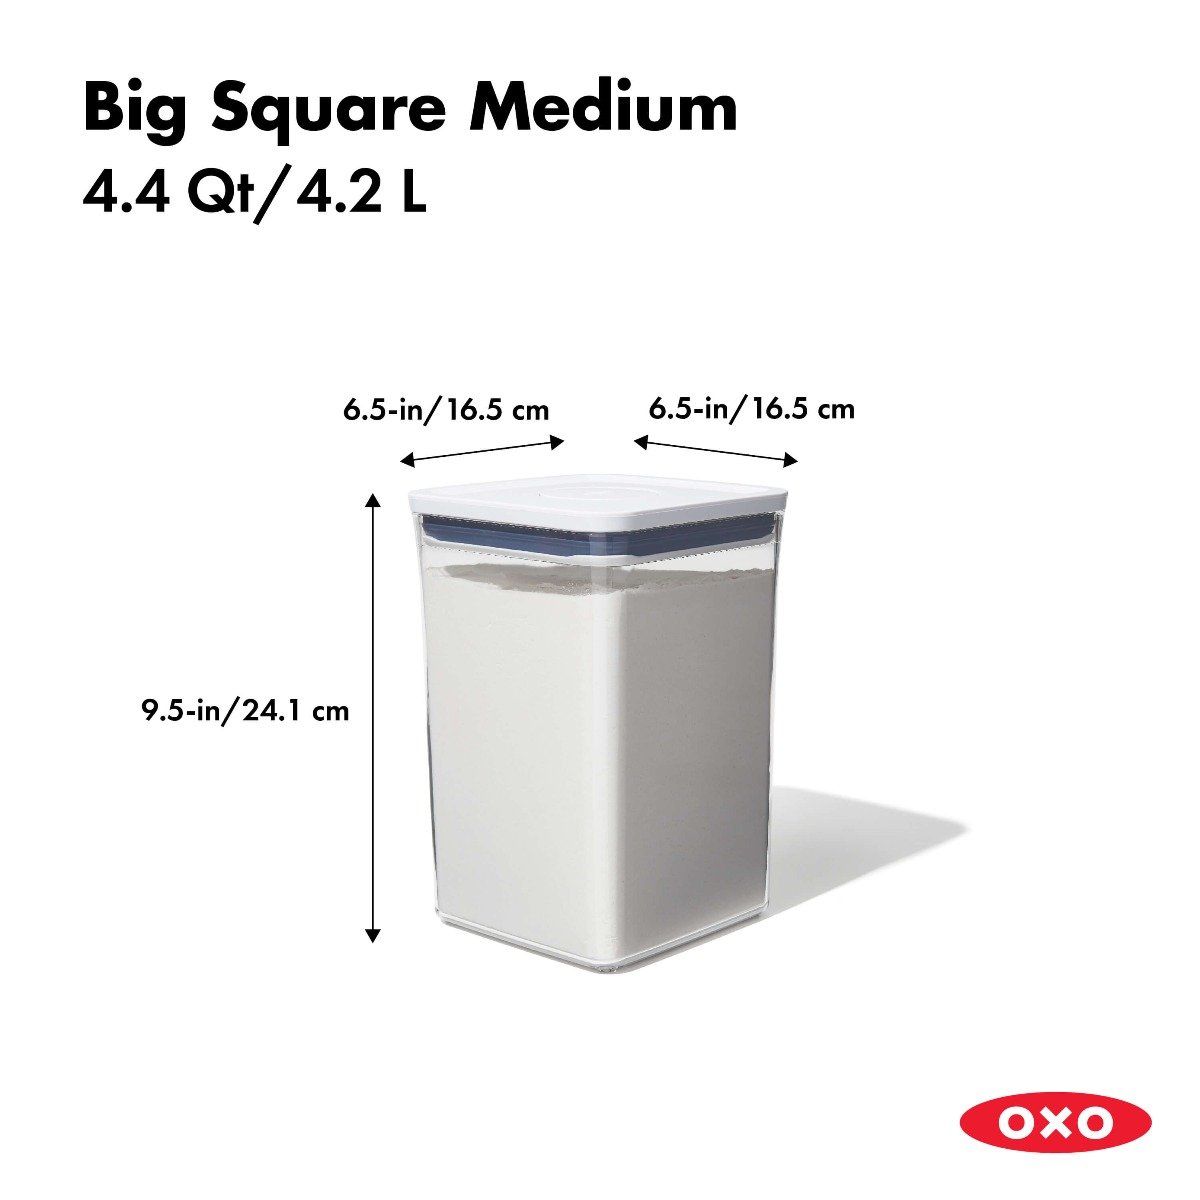 POP Container - Big Square Medium (4.4 Qt.) specifications tab image one